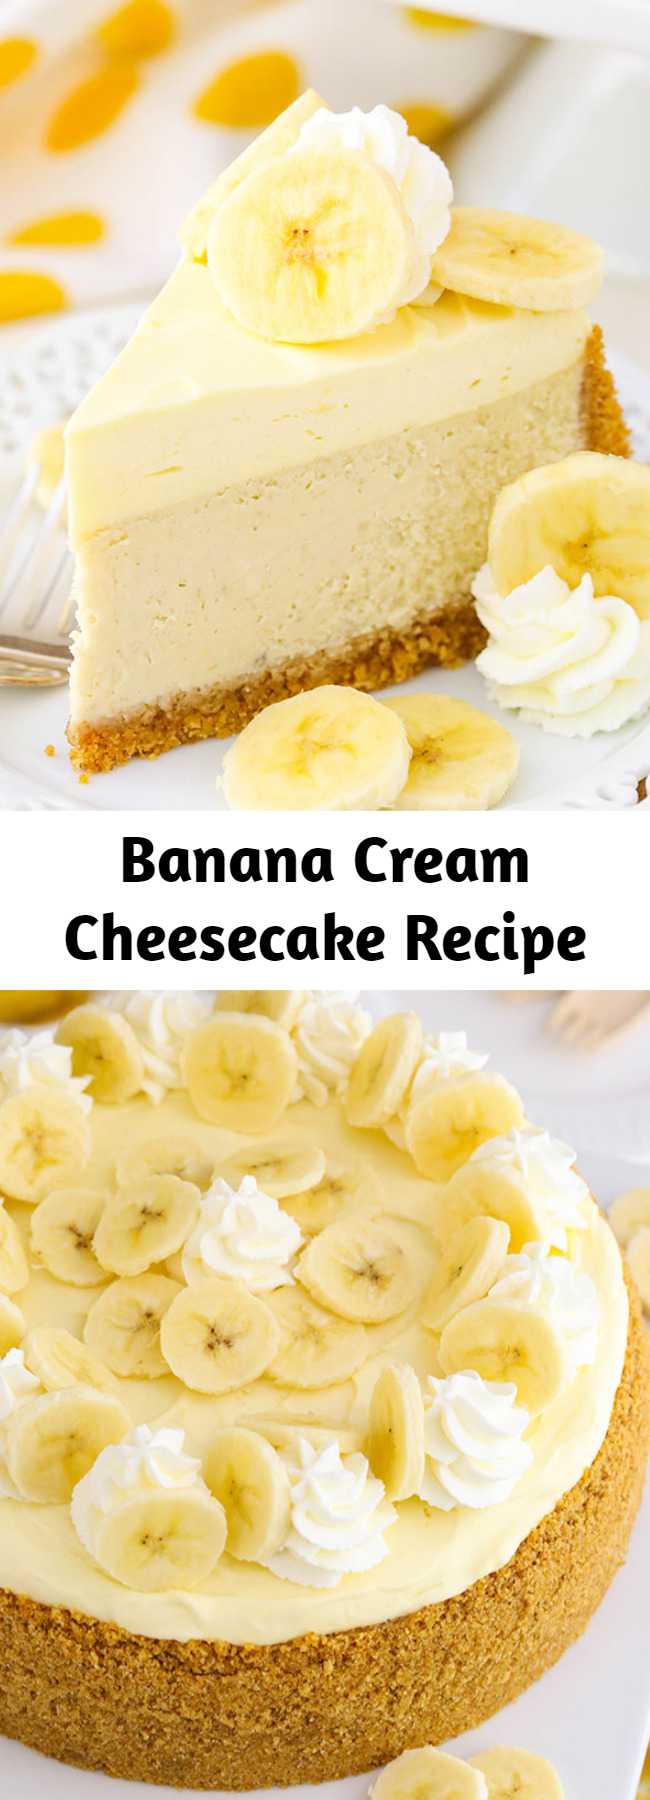 This Banana Cream Cheesecake Recipe is made with a fresh banana cheesecake topped with banana bavarian cream! It’s smooth, creamy & full of banana flavor! #cheesecake #cheesecakerecipe